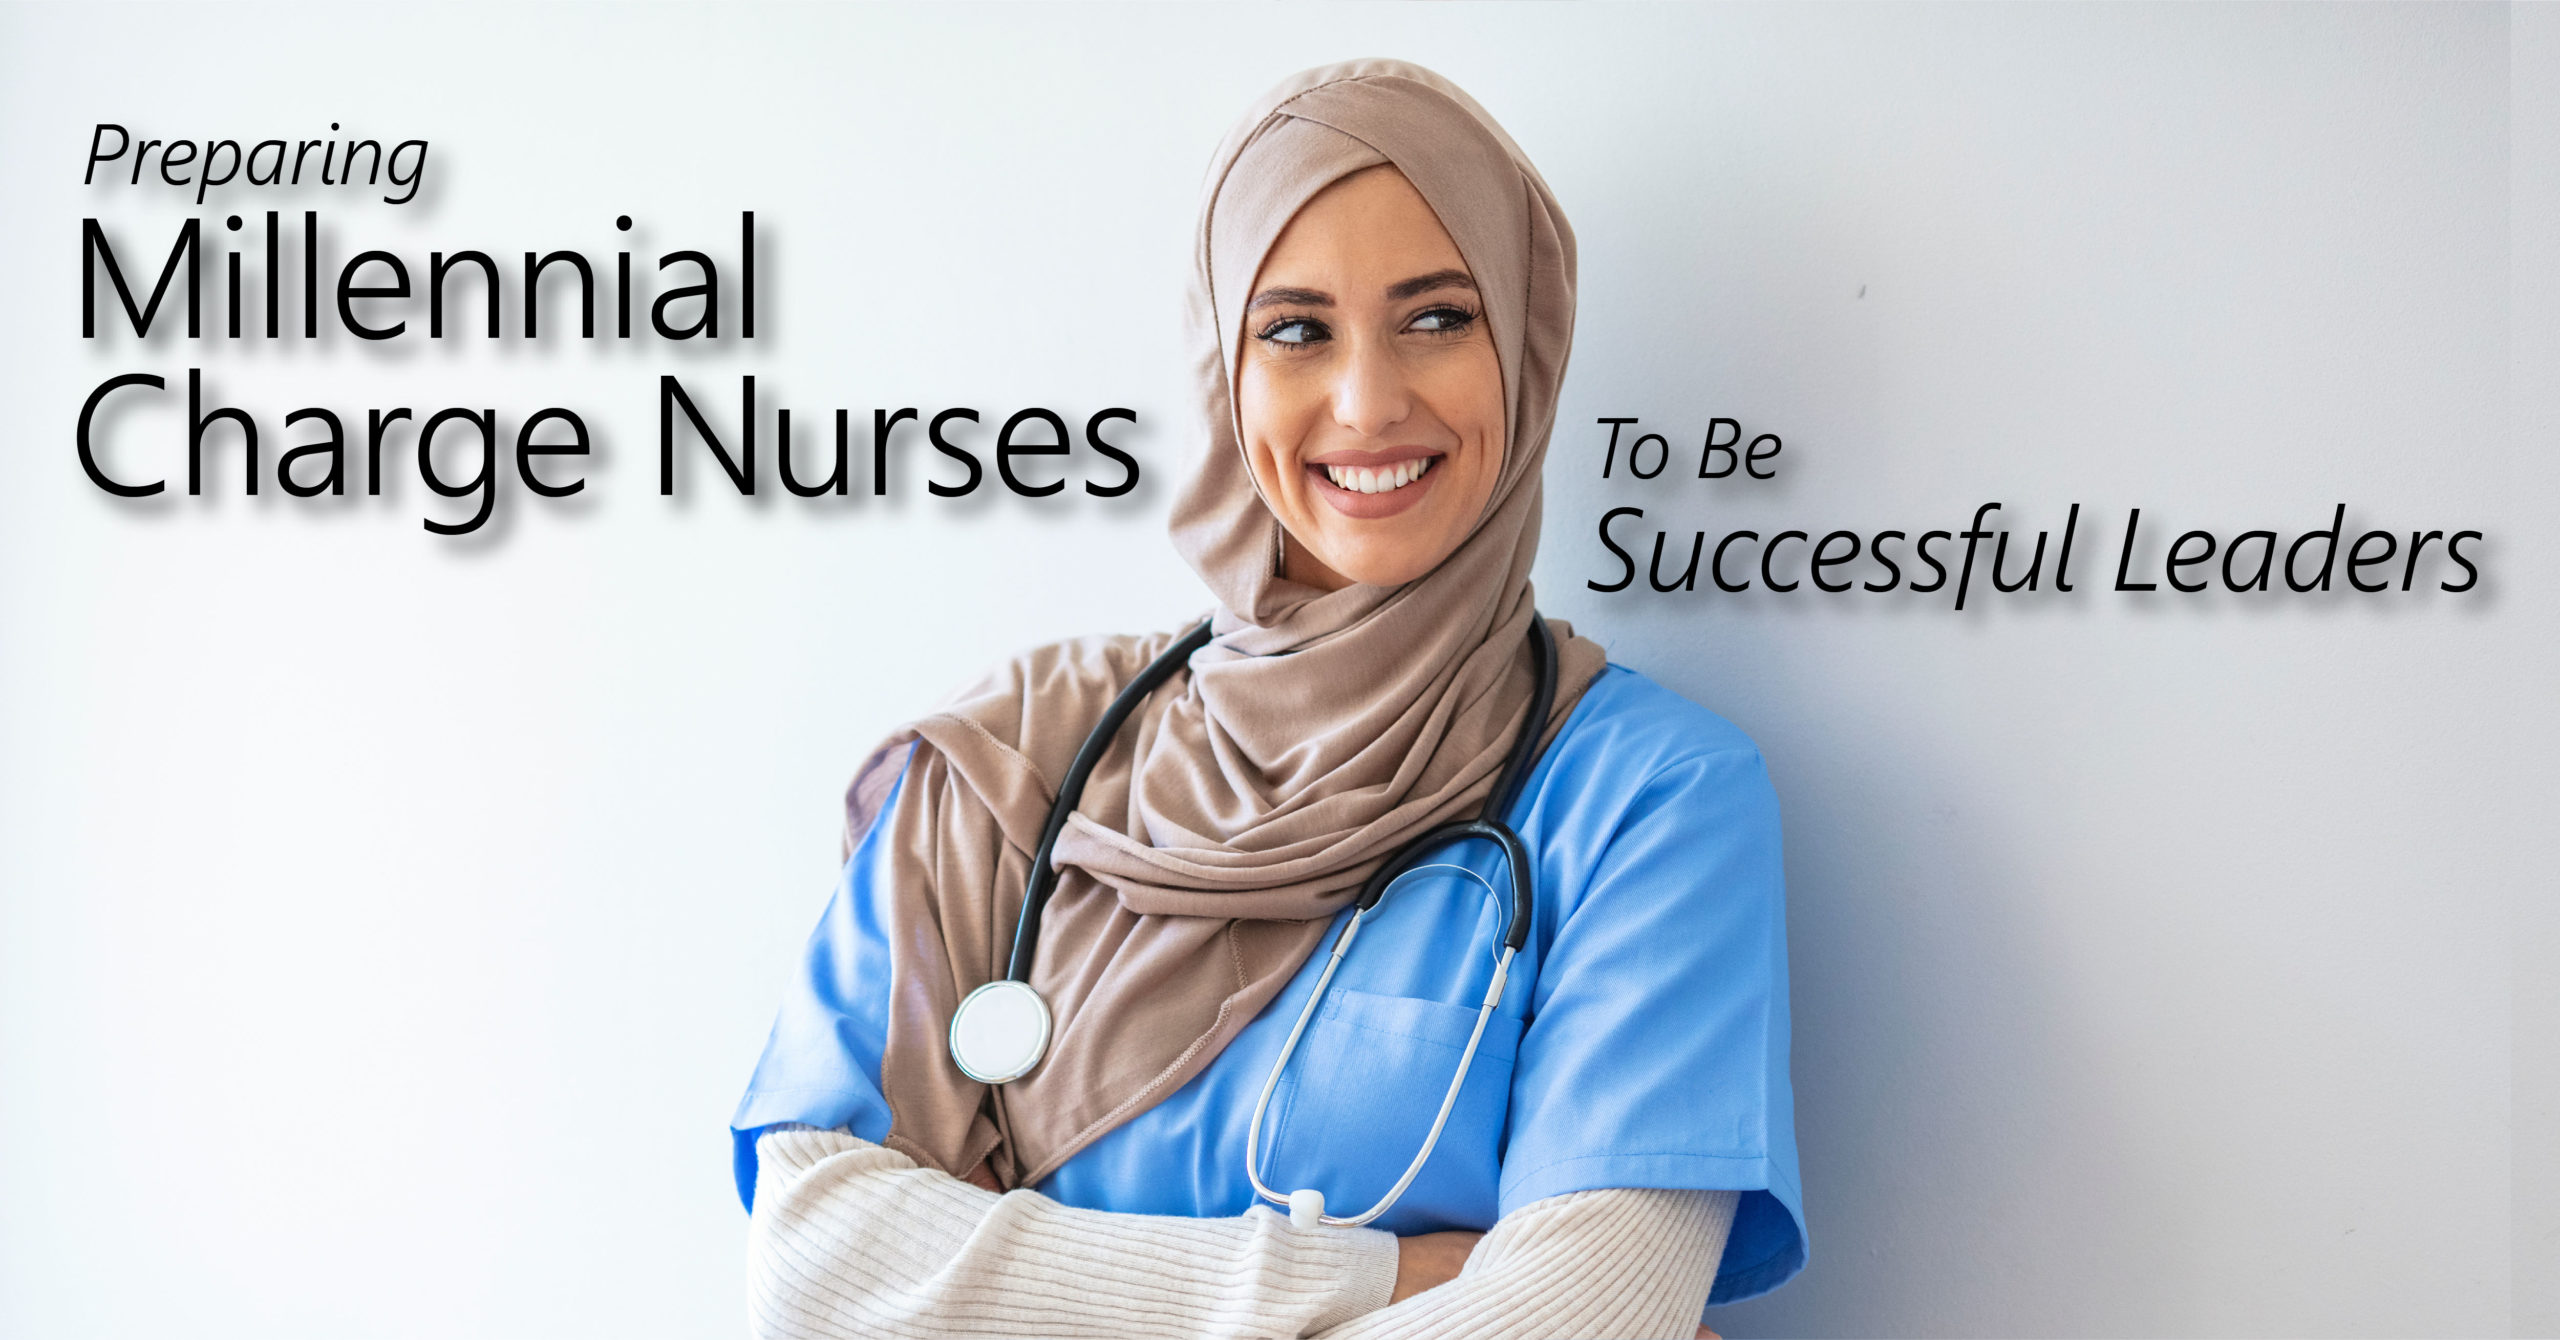 Preparing Millennial Charge Nurses To Be Successful Leaders